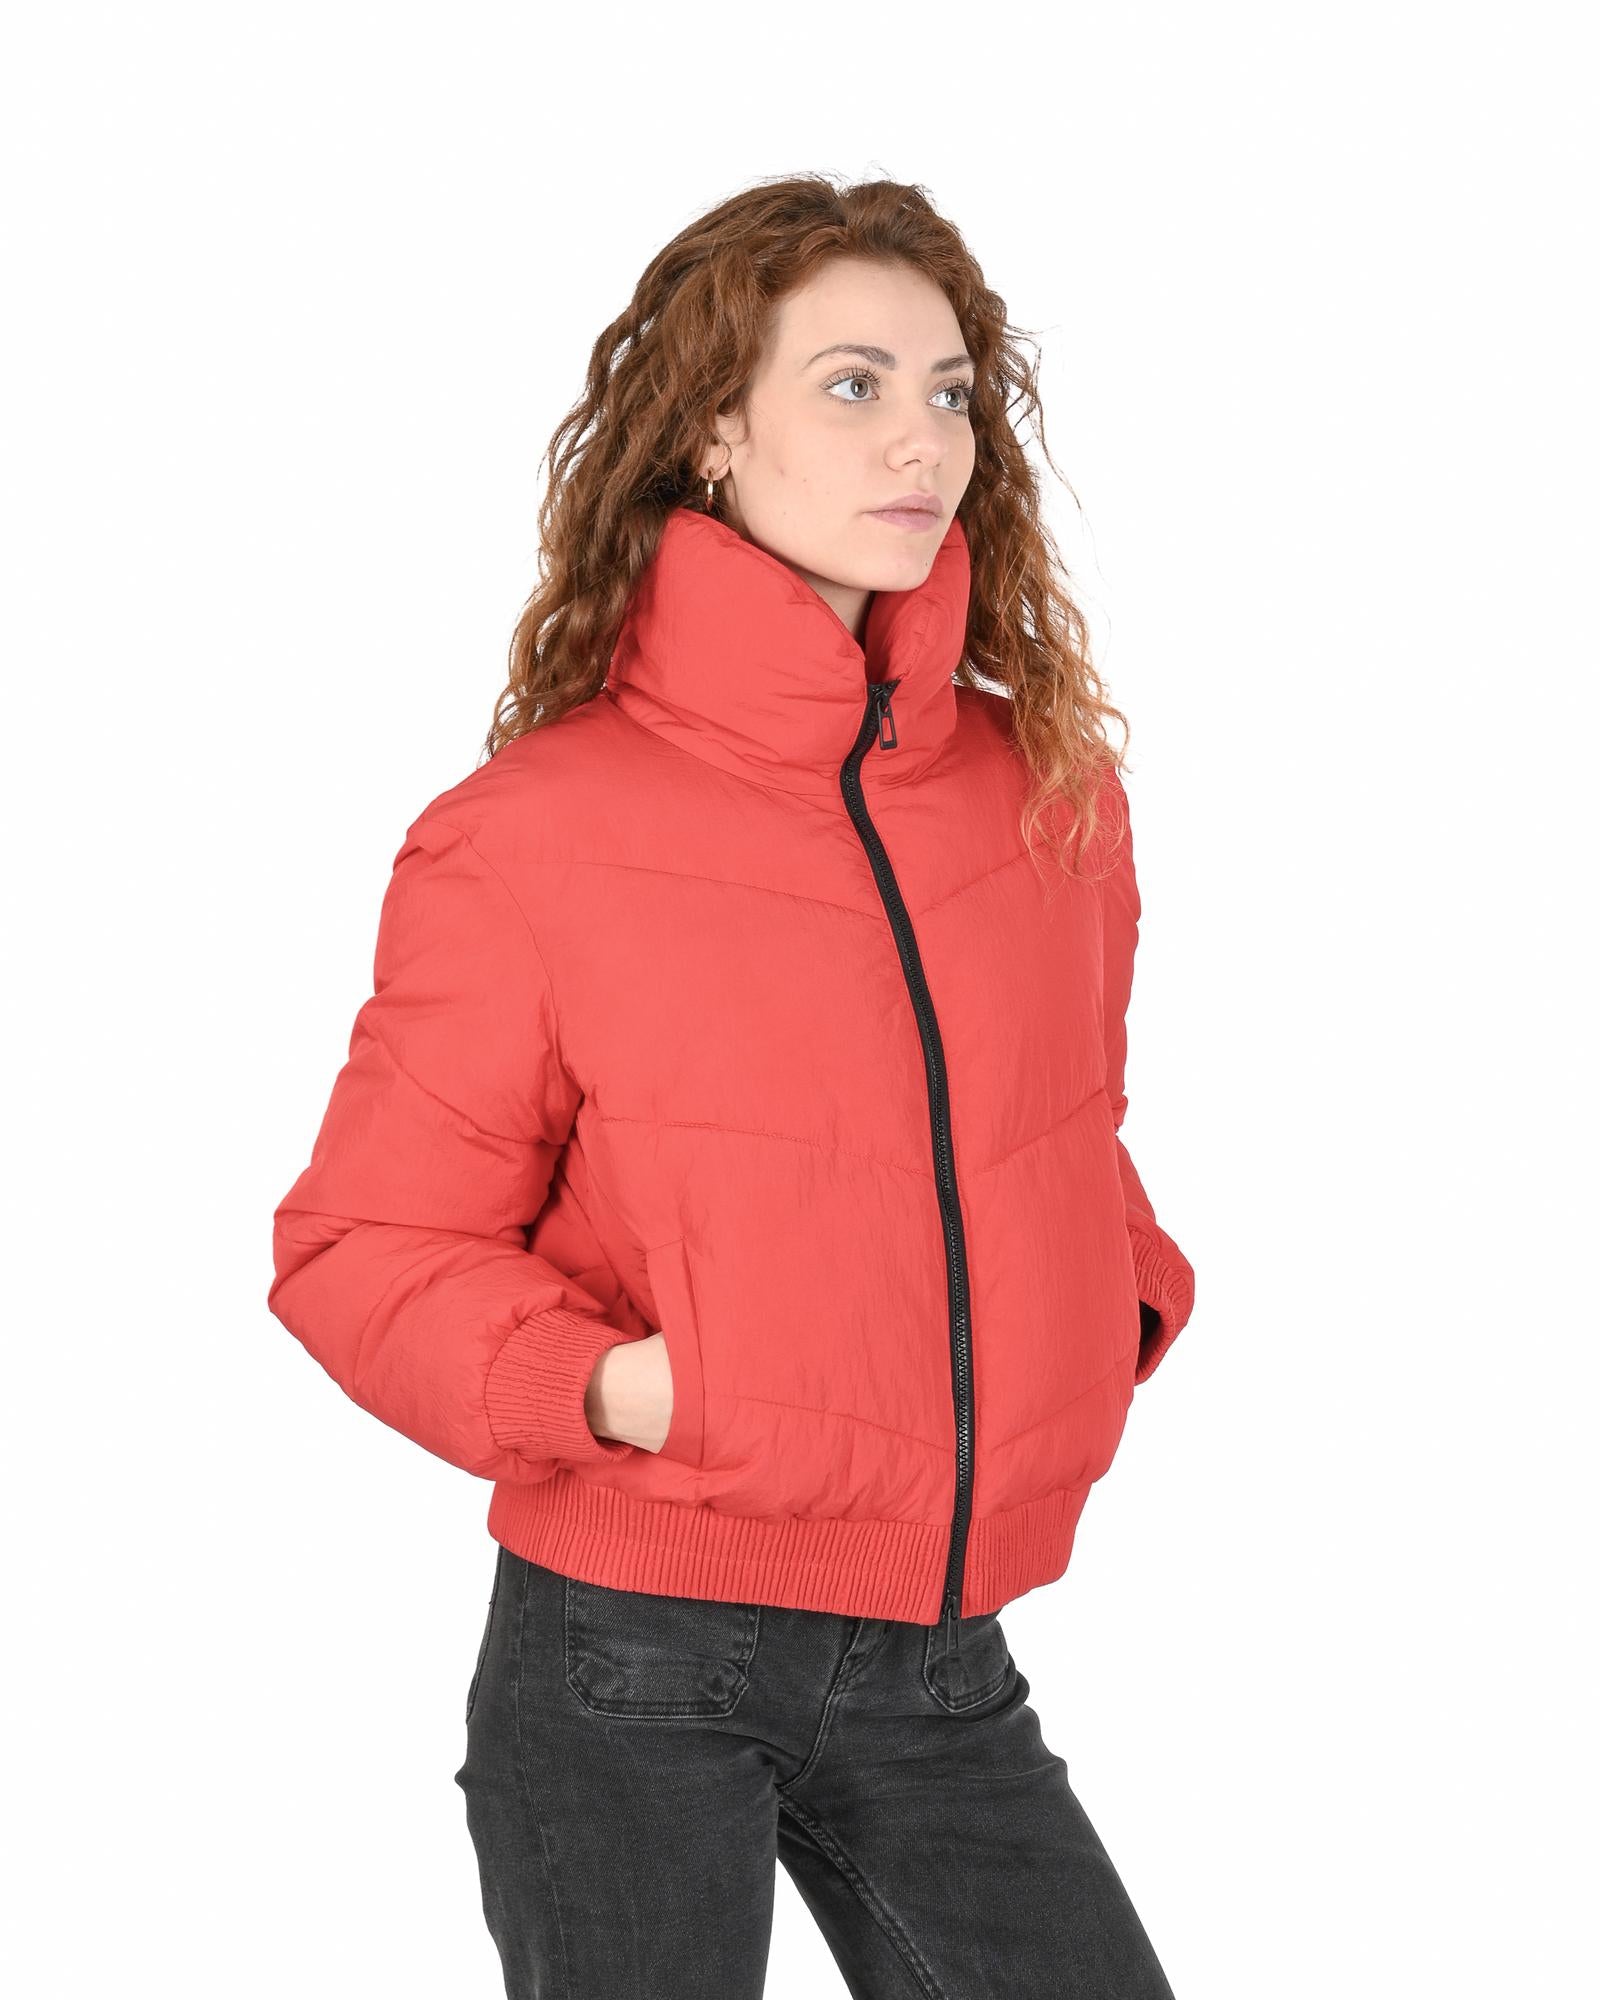 Hugo Boss Women's Red Polyamide Jacket in Red - XS